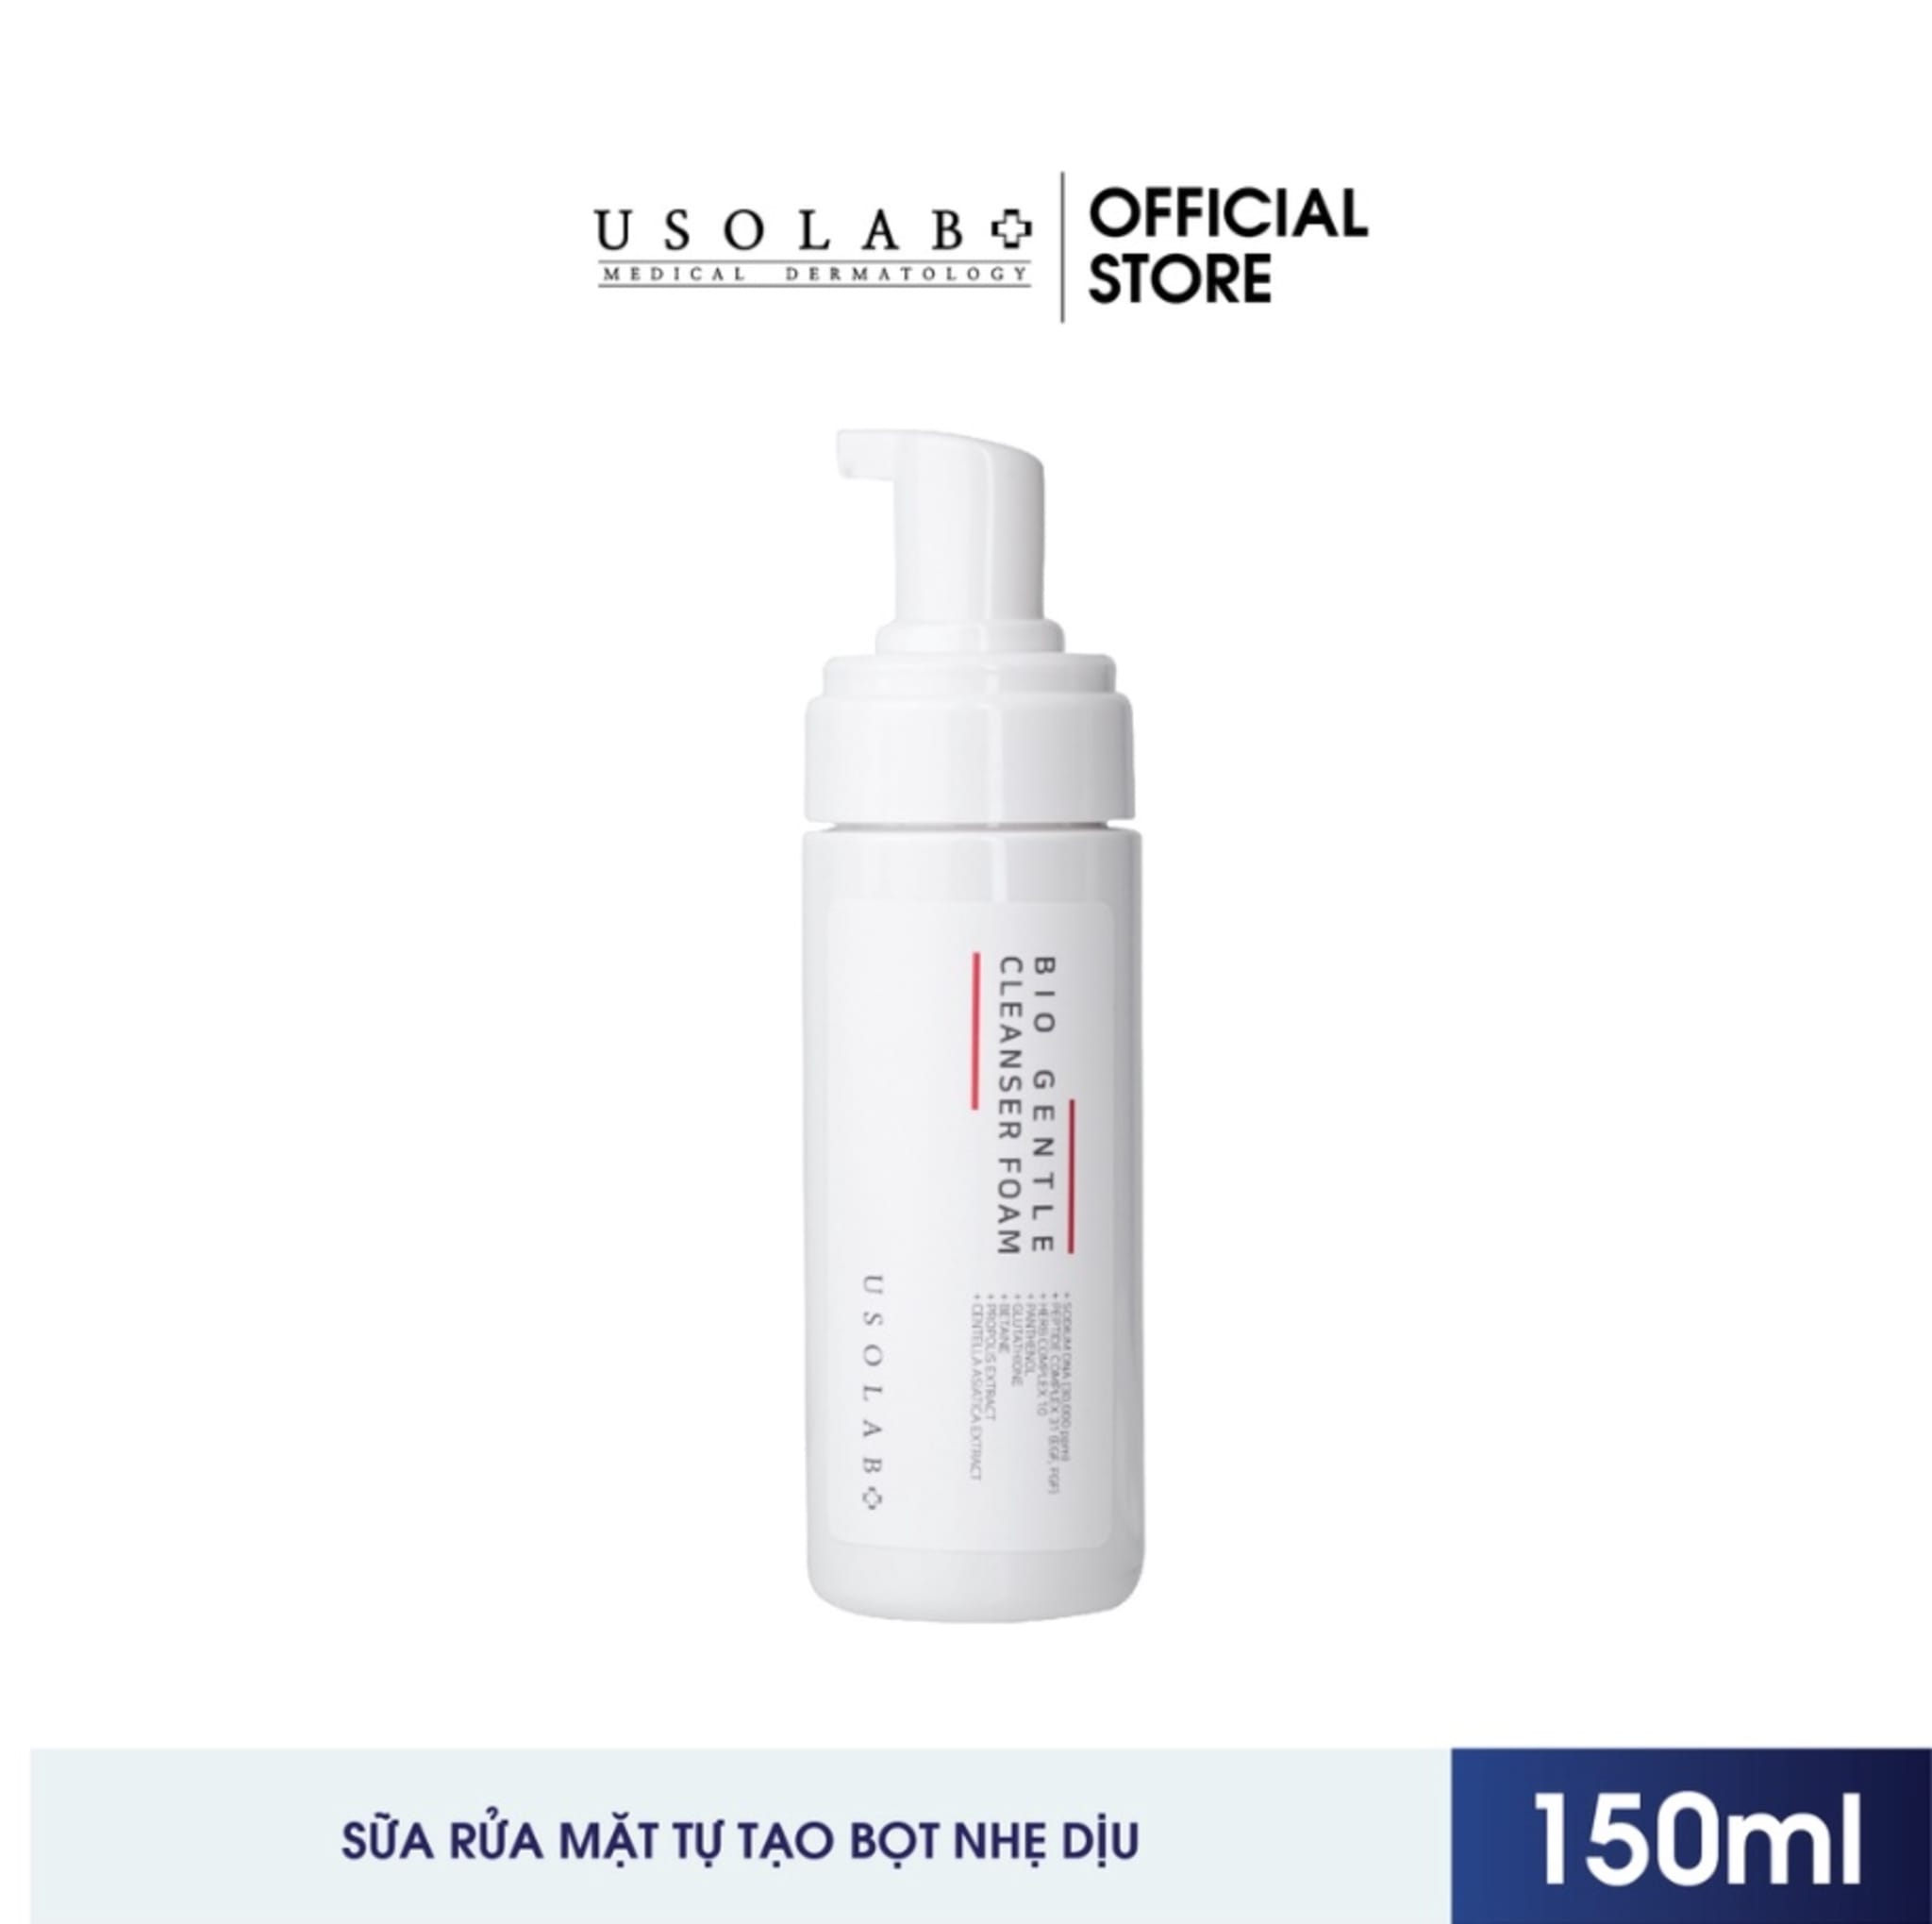 Sữa rửa mặt tự tạo bọt nhẹ dịu Usolab Gentle Cleanser Foam 150ml - Product image